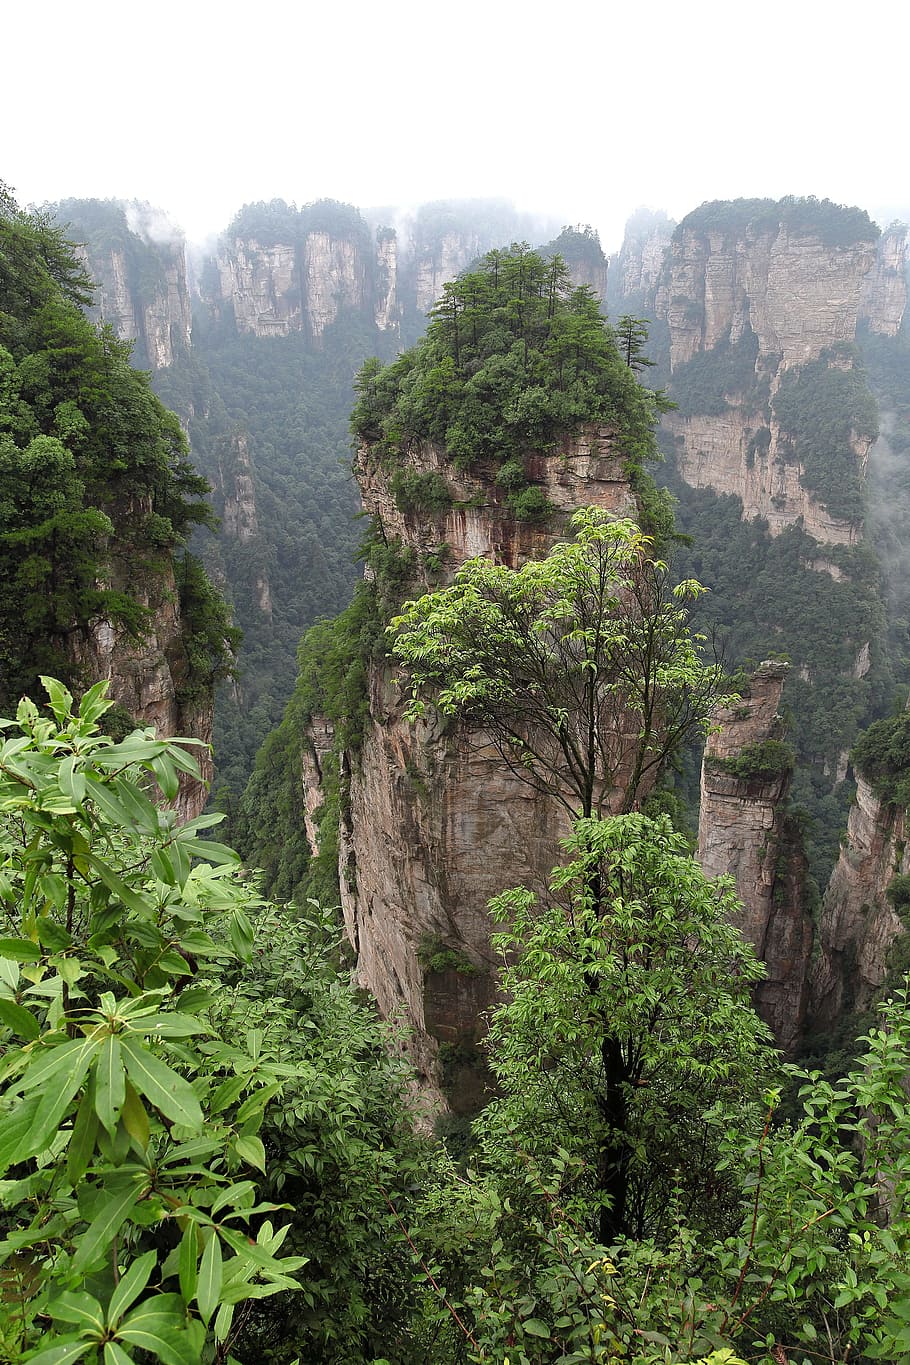 zhangjiajie, wulingyuan, quartz sandstone peak woodland landscape, pillar of the south heaven, hallelujah, plant, tree, mountain, nature, scenics - nature